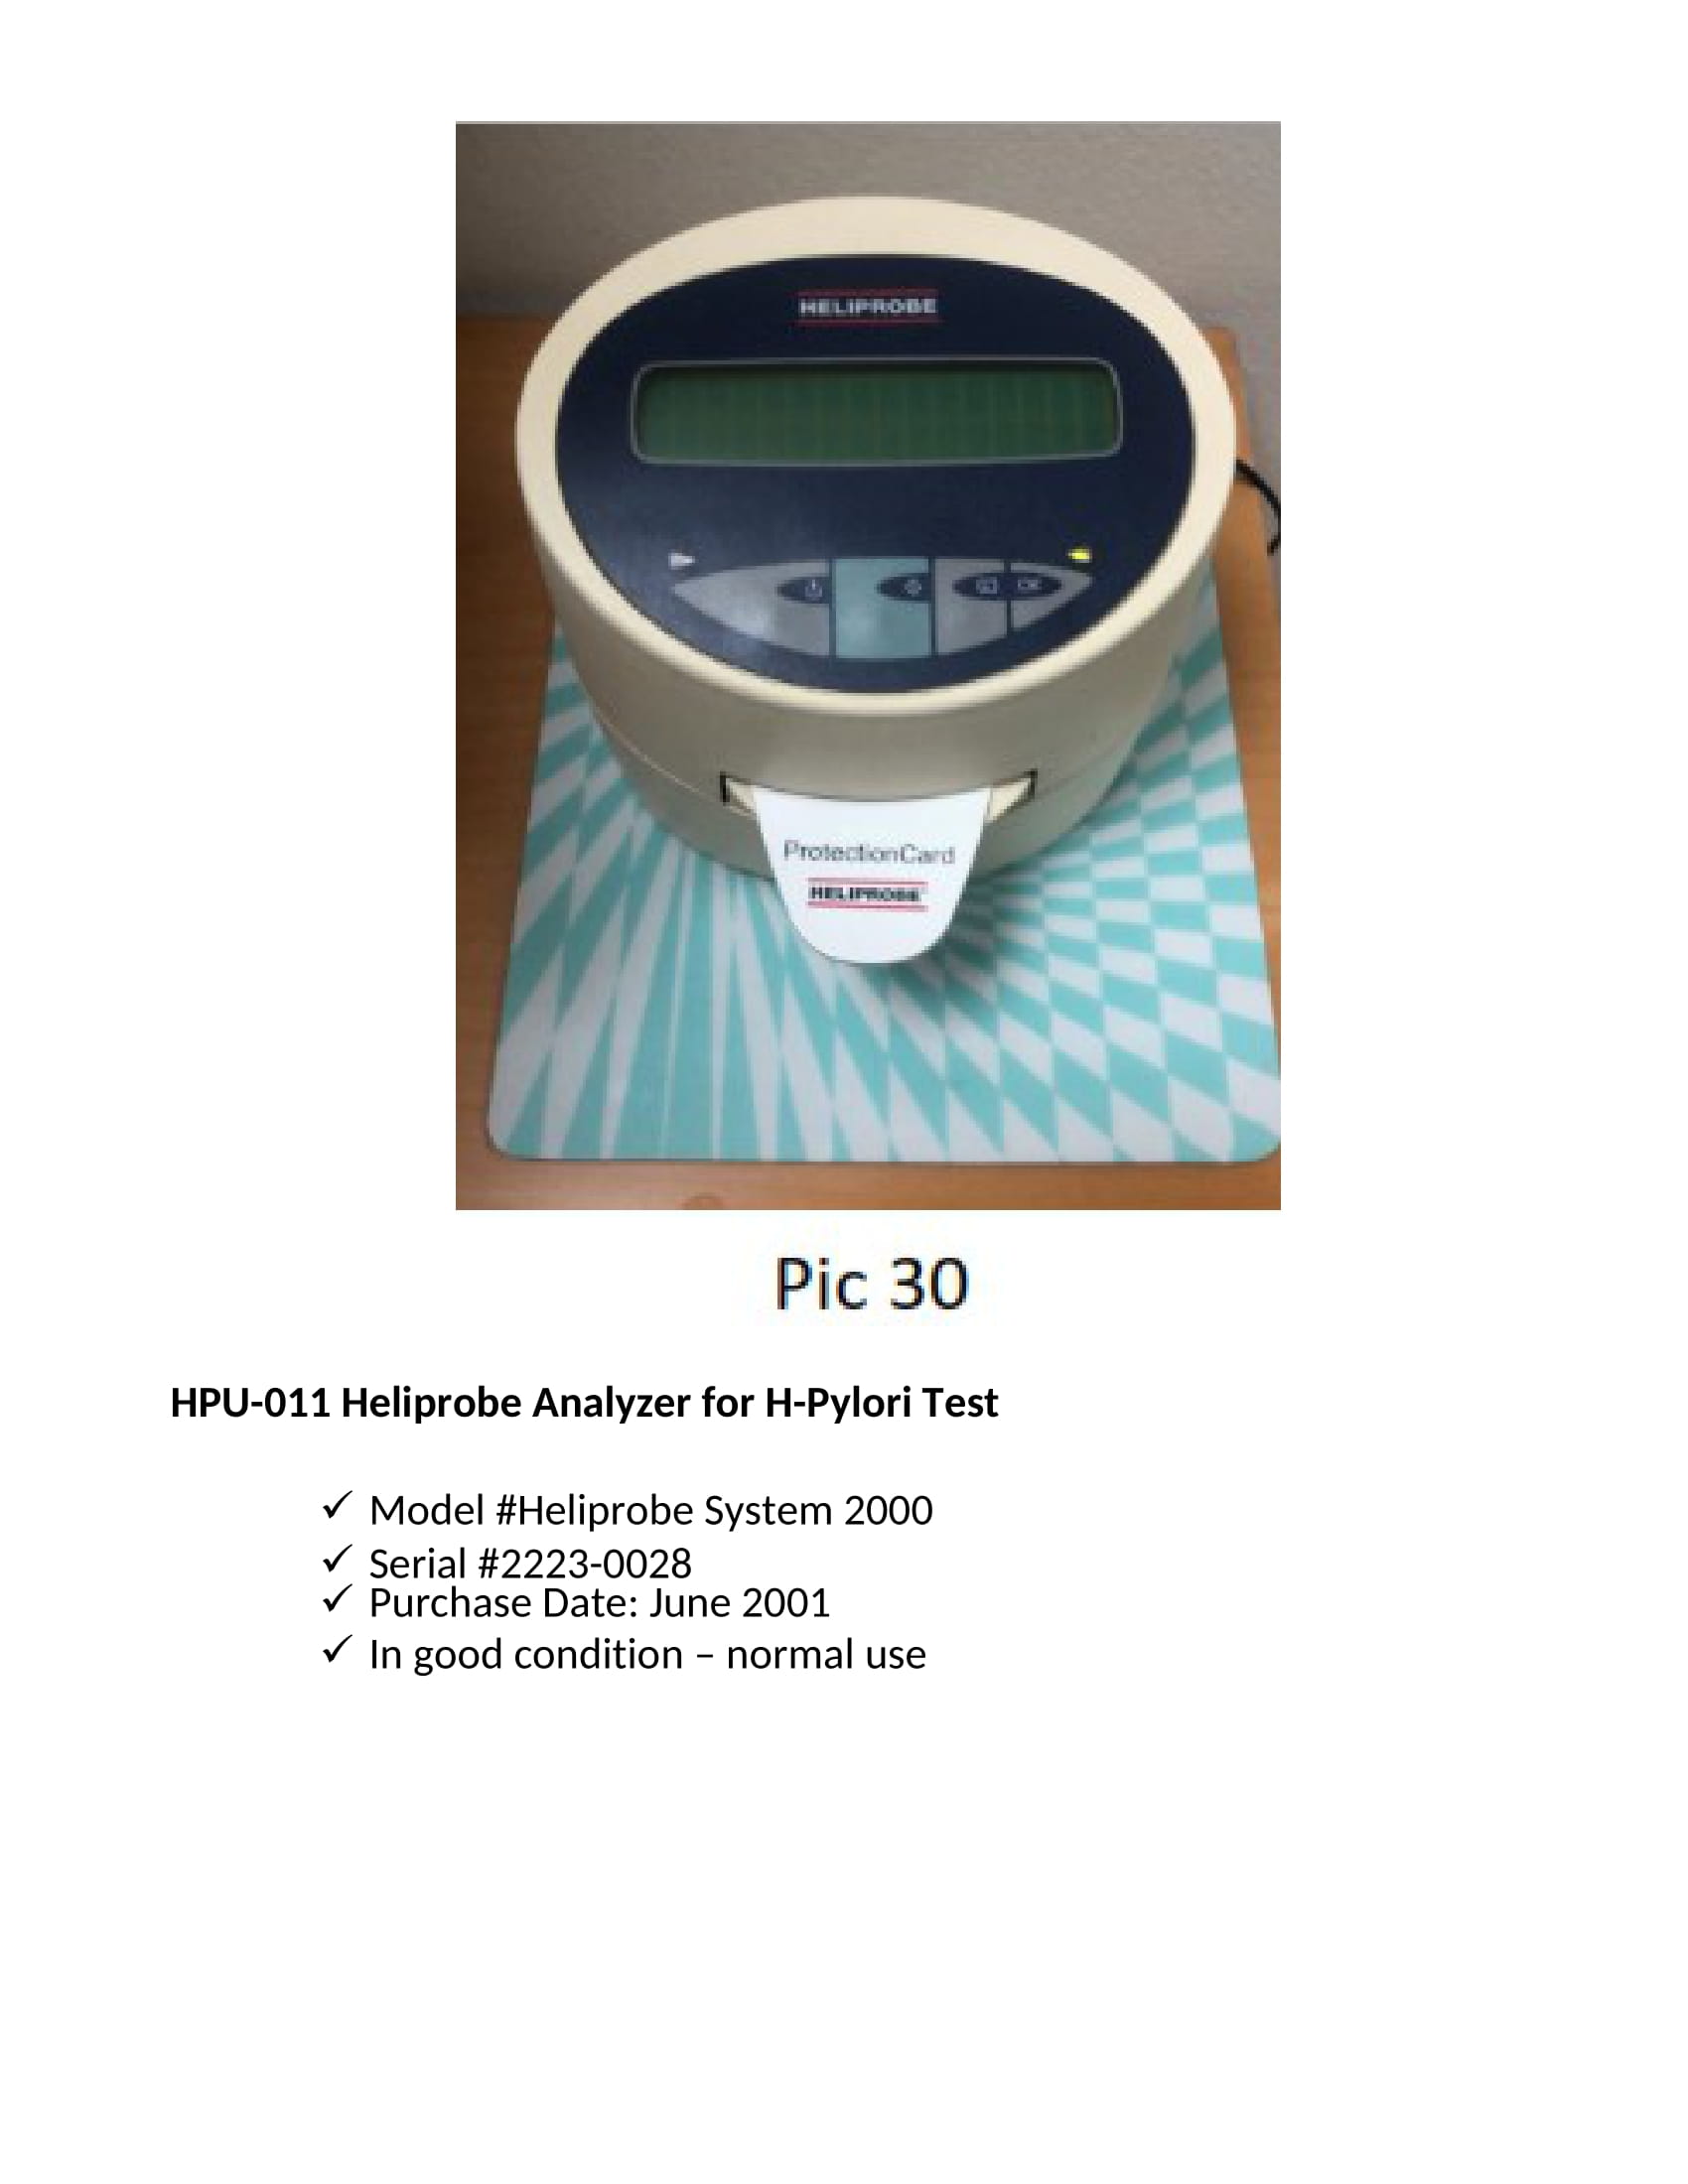 HPI-011 HELIPROBE ANALYZER FOR H-PYLORI TEST